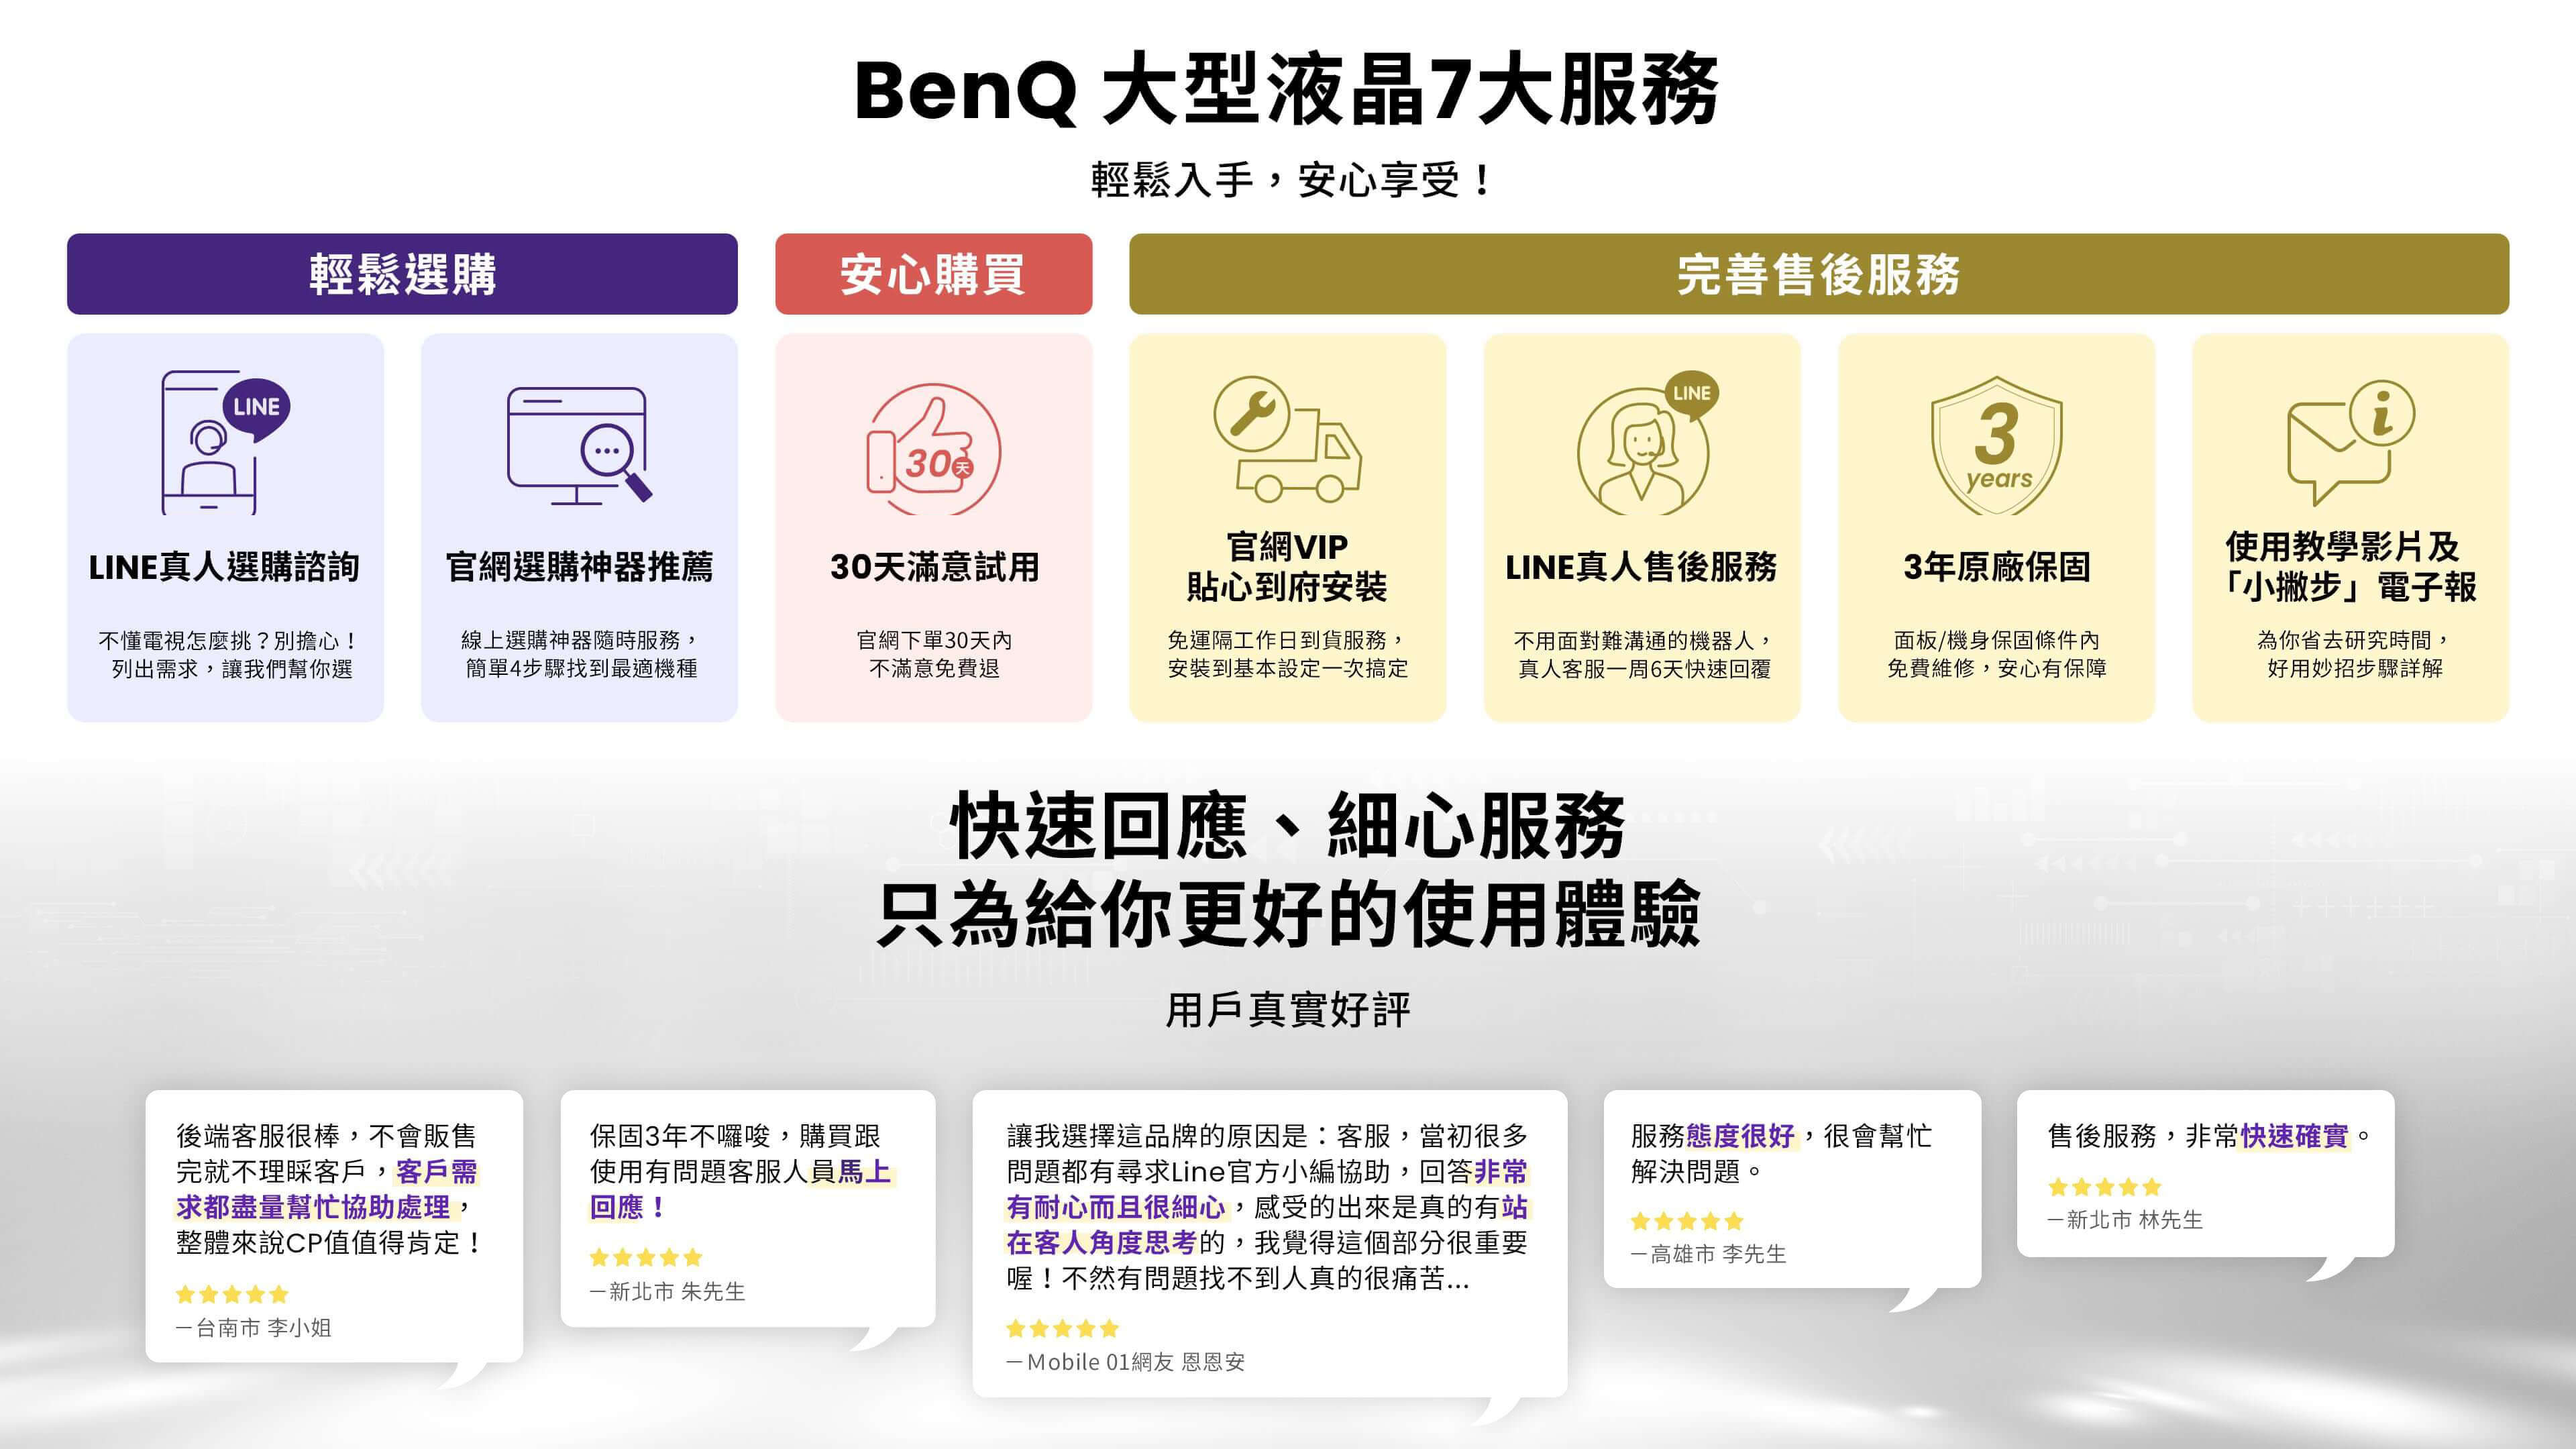 BenQ 大型液晶 7 大服務